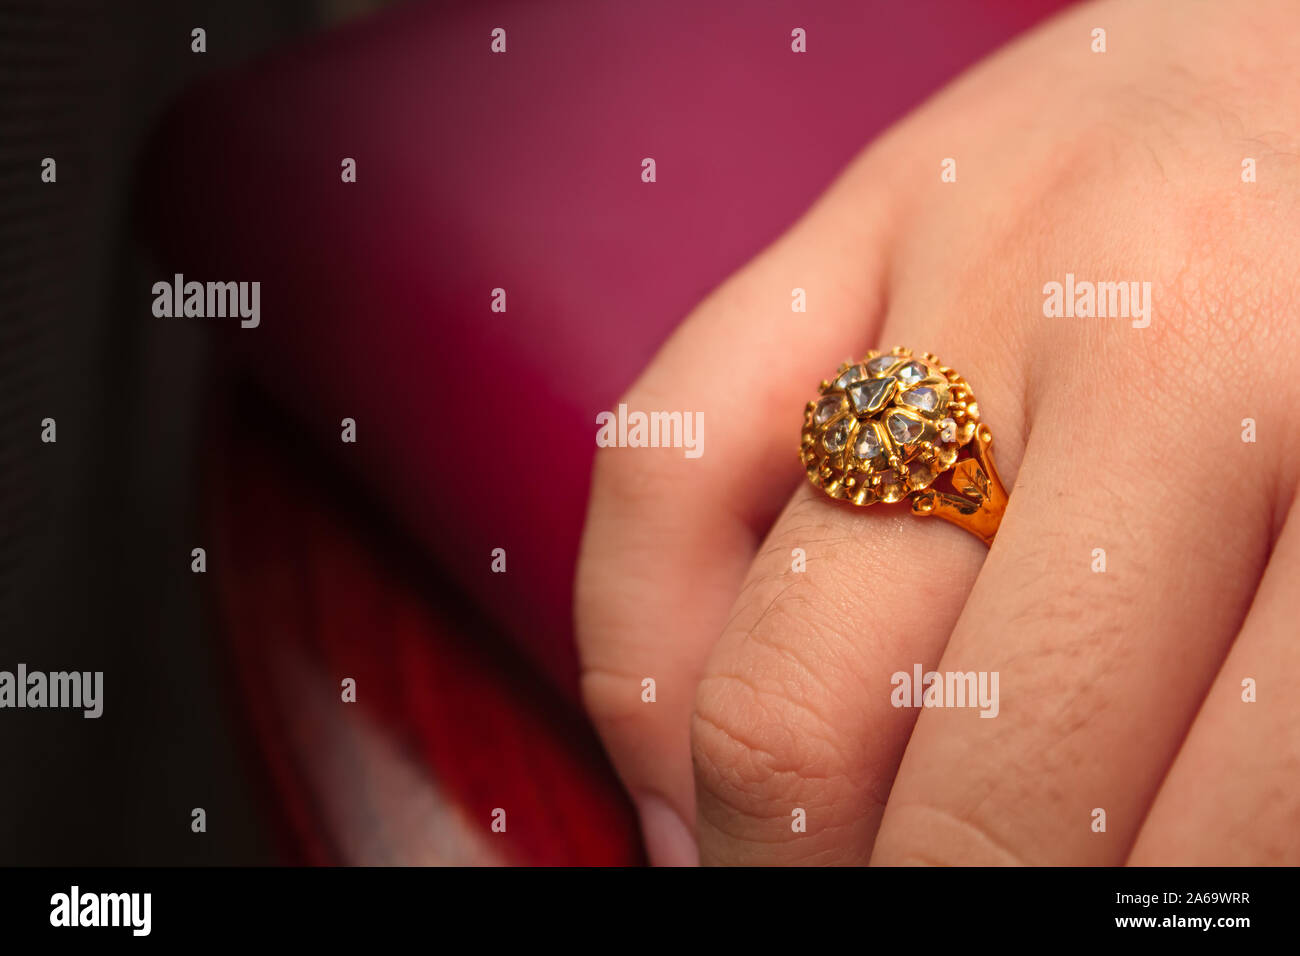 649 Thai Gold Bracelet Design Stock Photos - Free & Royalty-Free Stock  Photos from Dreamstime